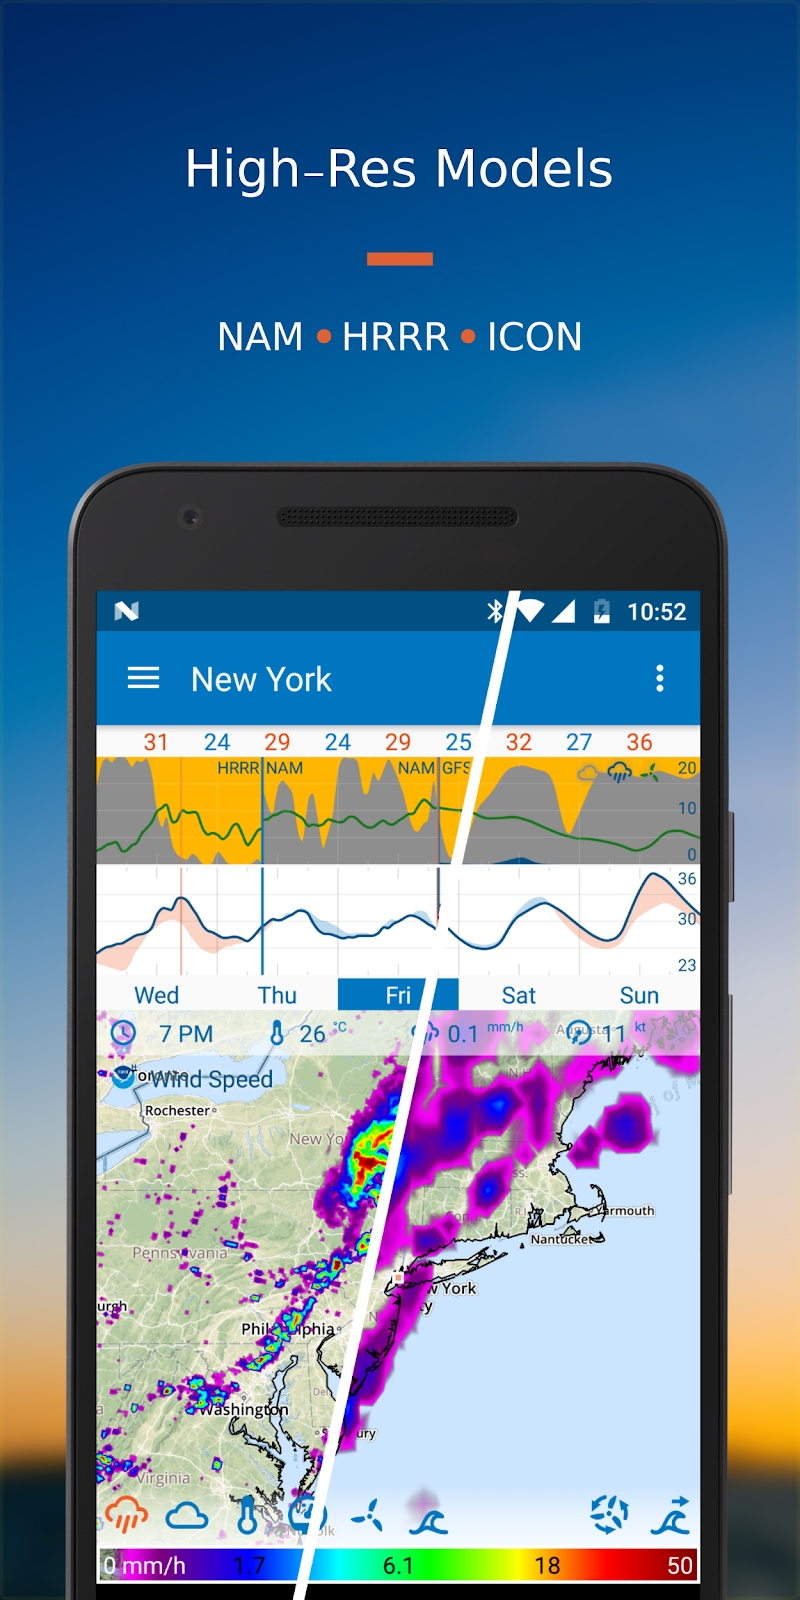 Flowx: Weather Map Forecast